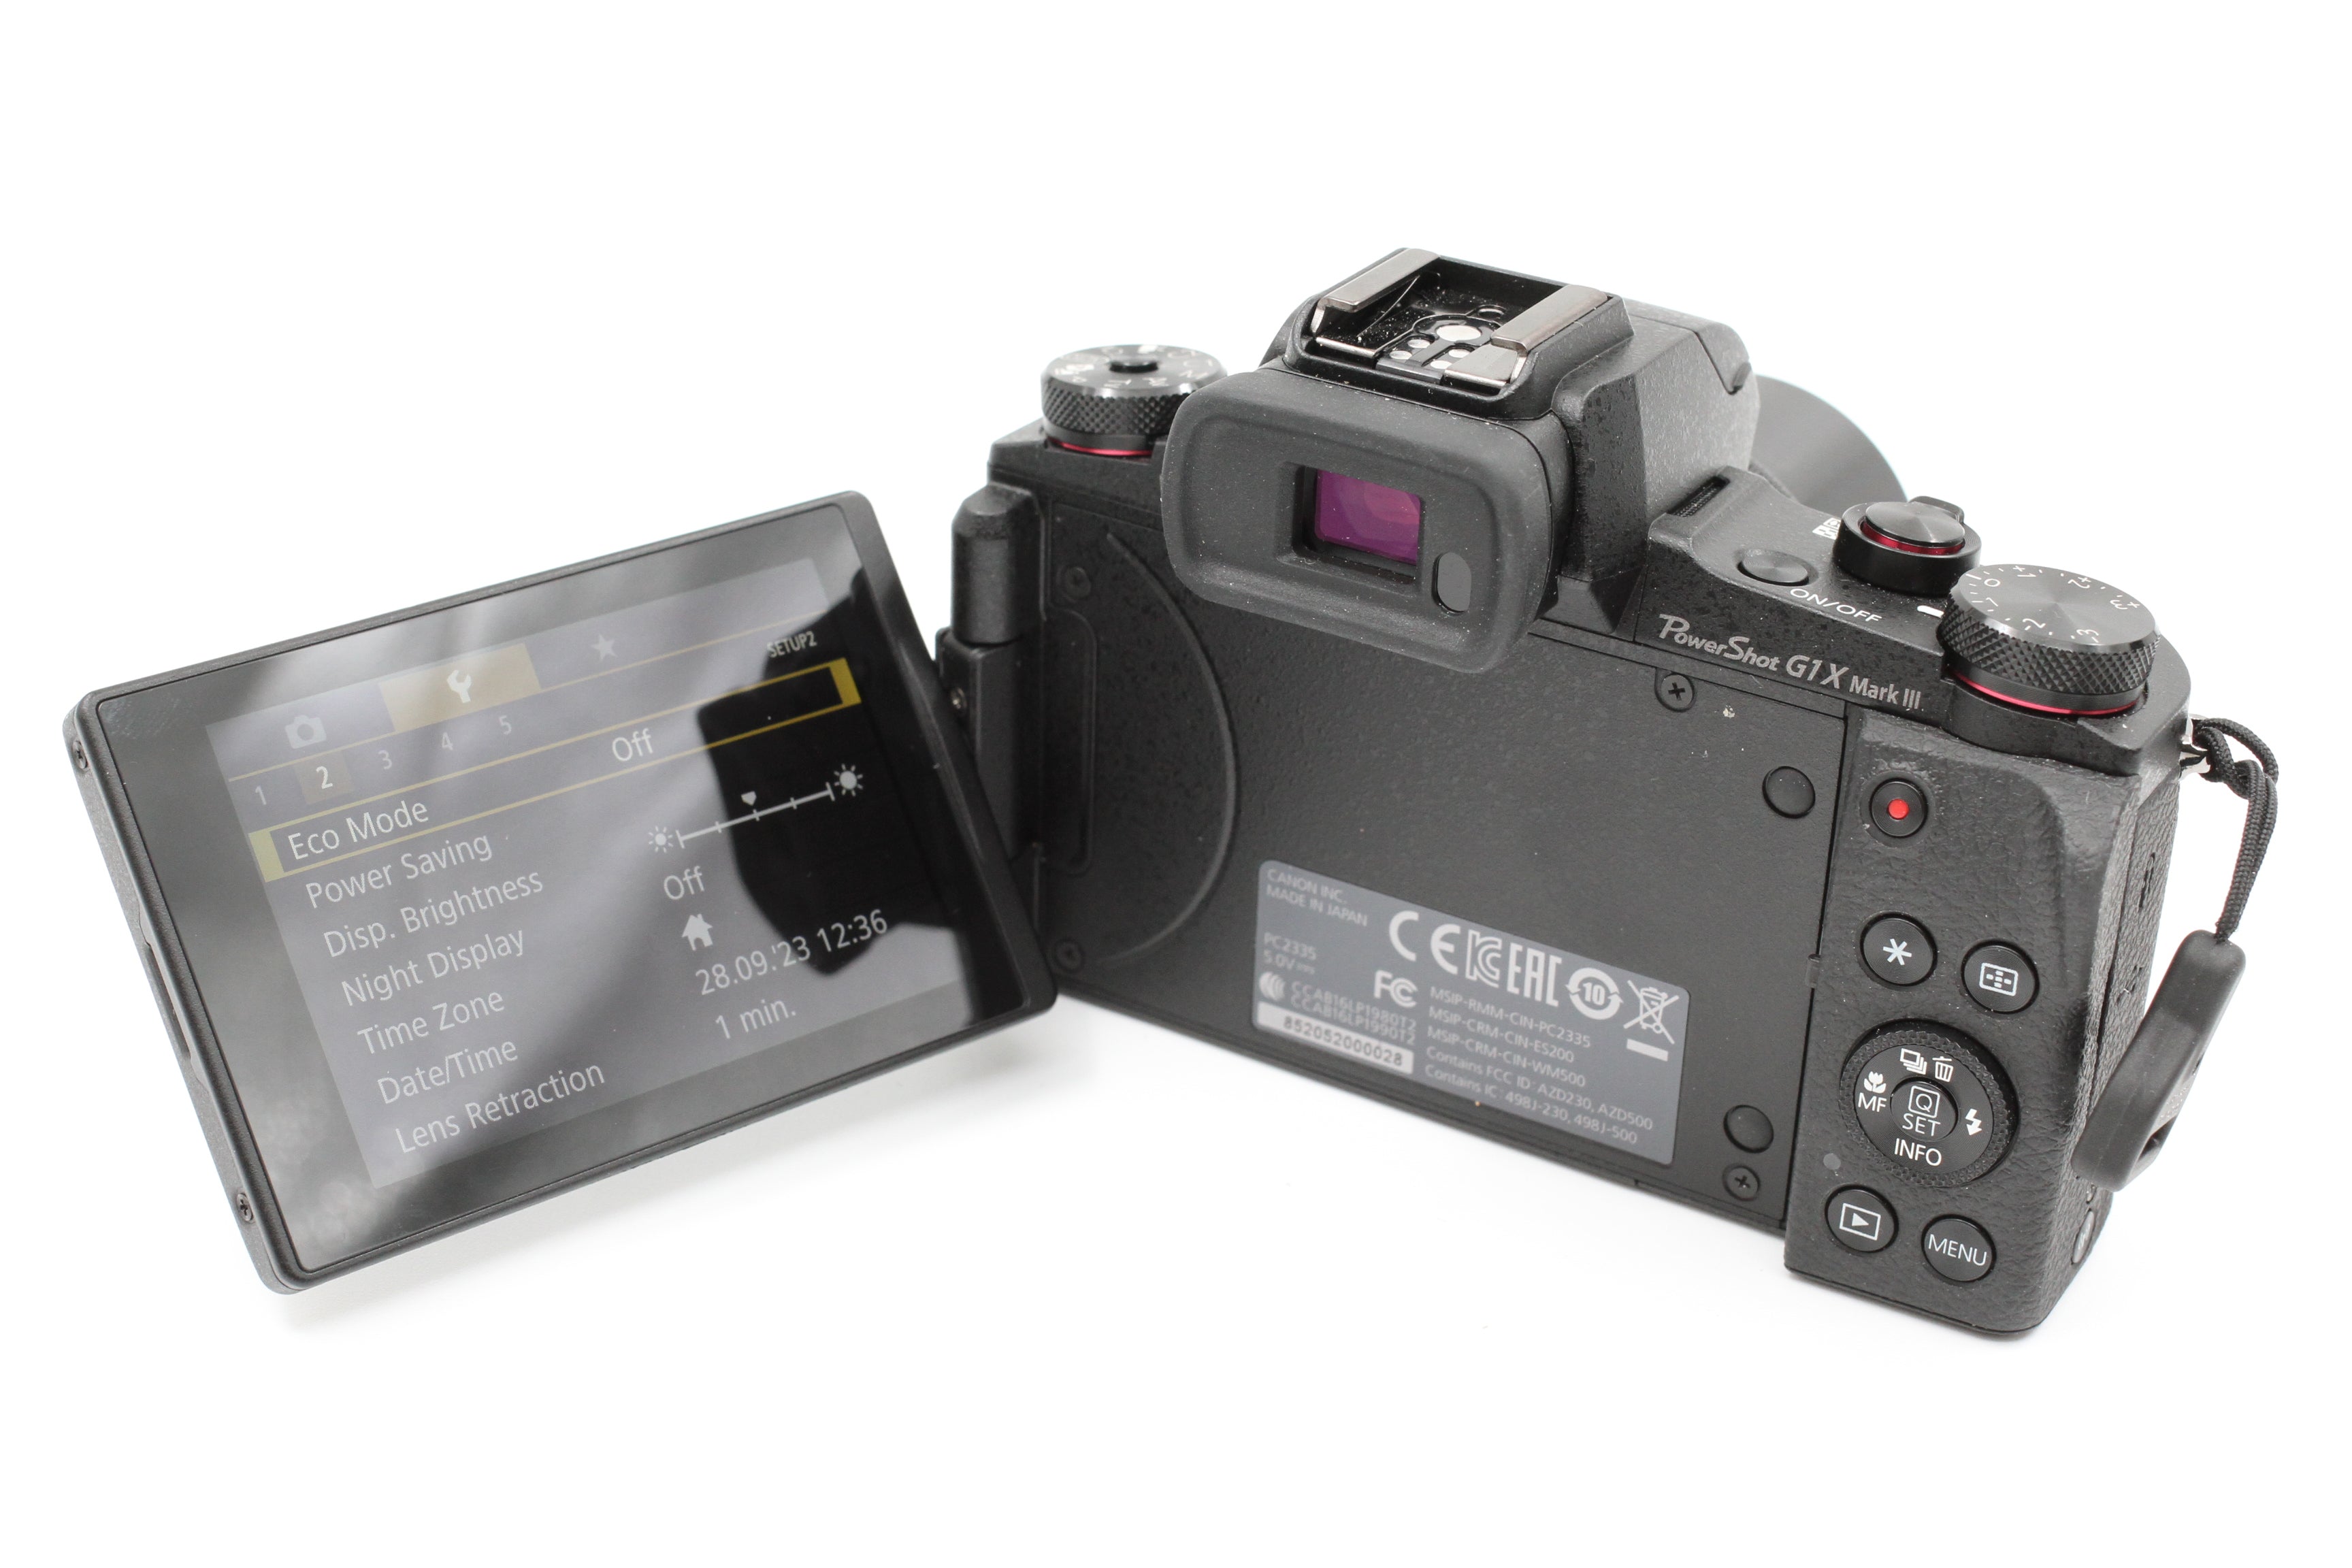 Canon Powershot G1X Mark iii Digital Compact